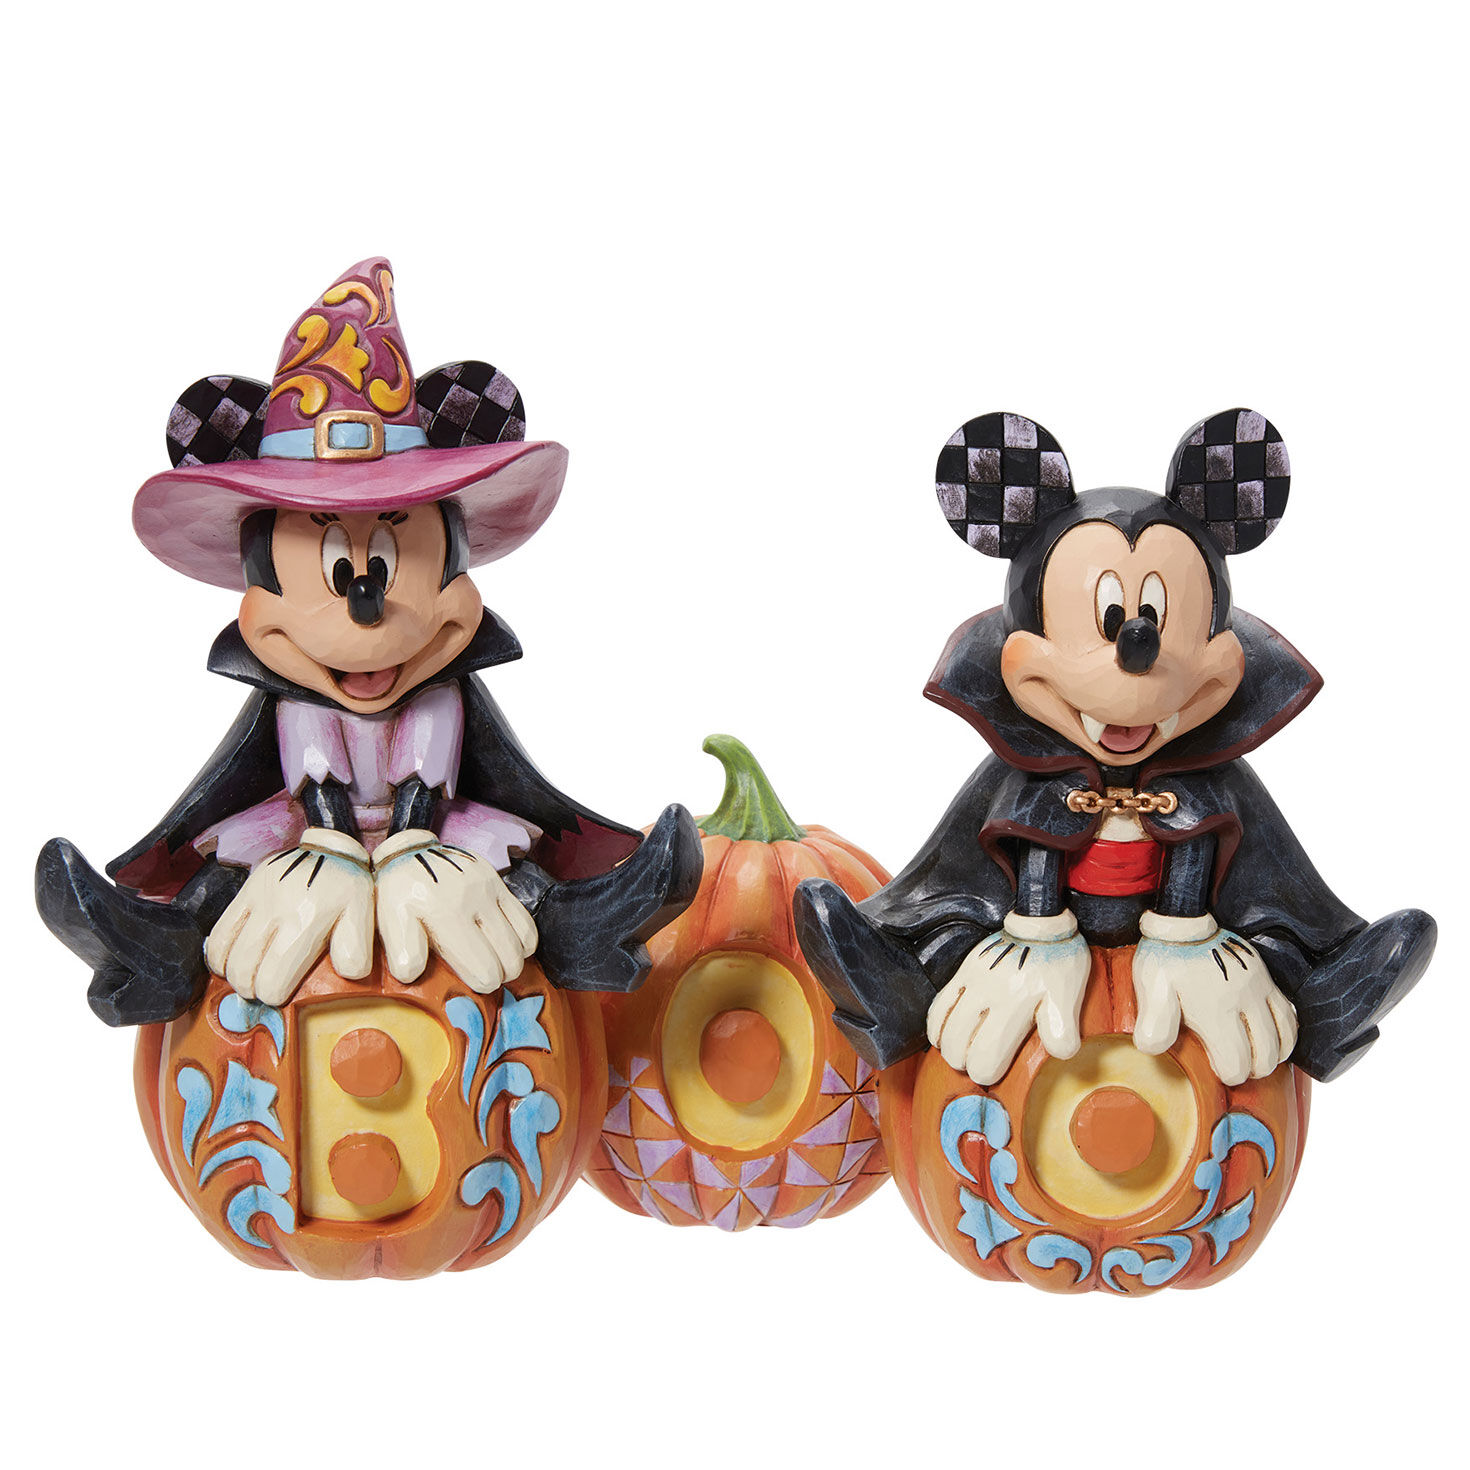 Hinge Seem threaten Jim Shore Disney Mickey Mouse and Minnie Mouse Halloween Figurine, 7.25" -  Figurines - Hallmark